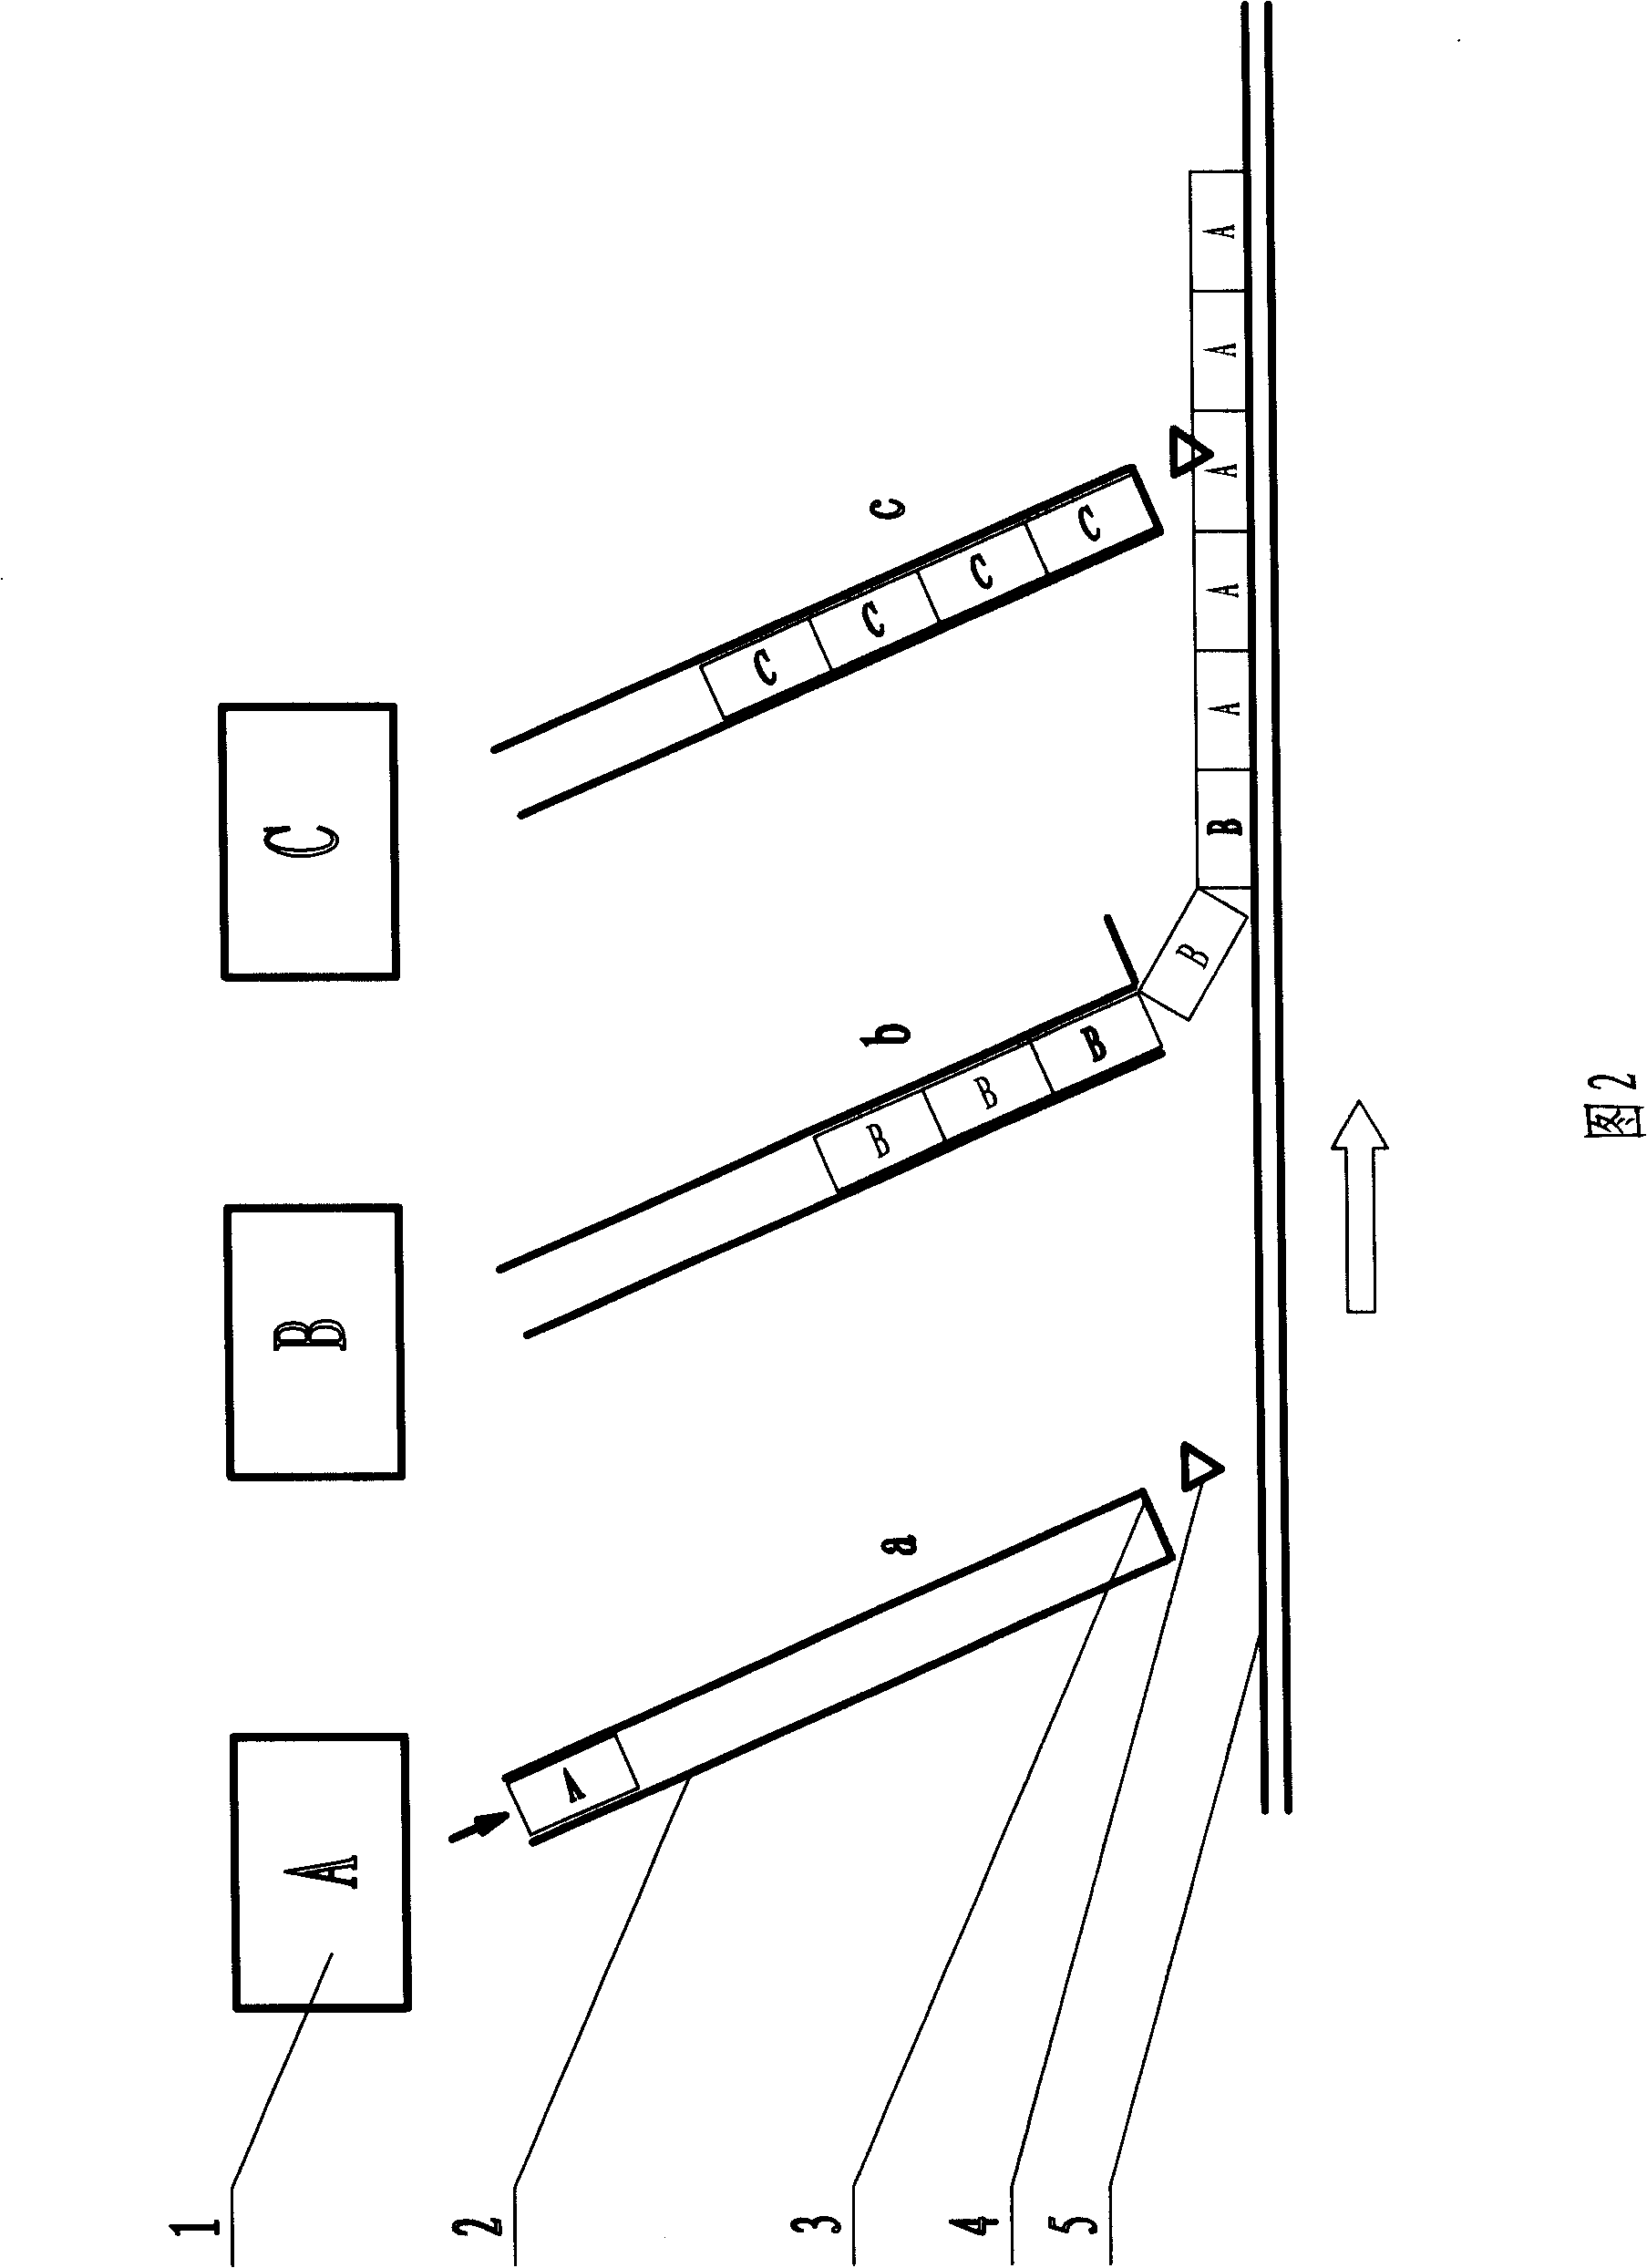 Carton packaged cigarette rapid-sorting method based on buffer memory principle and paralleling sorting mechanism